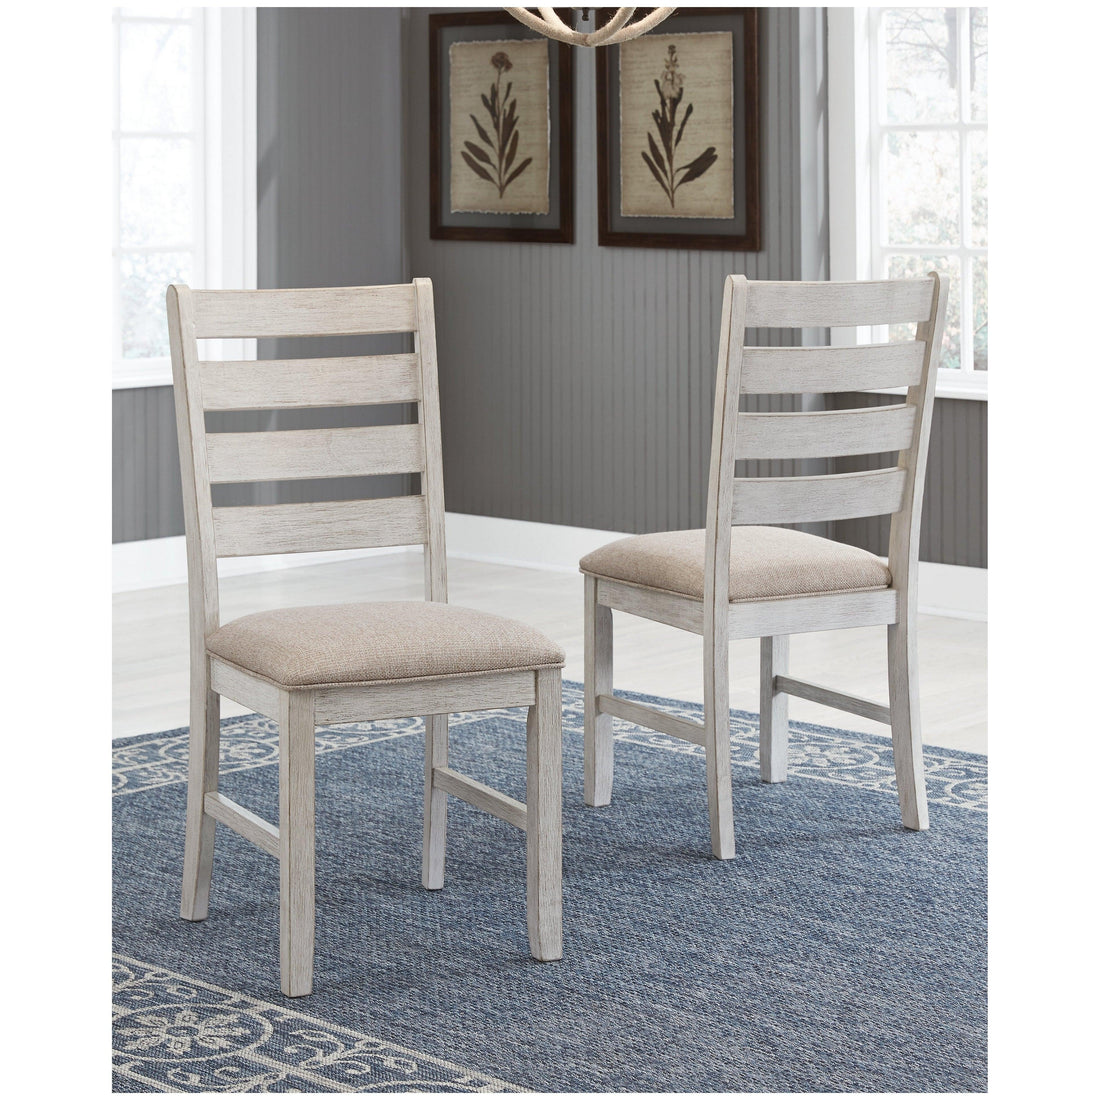 Skempton Dining Chair Ash-D394-01